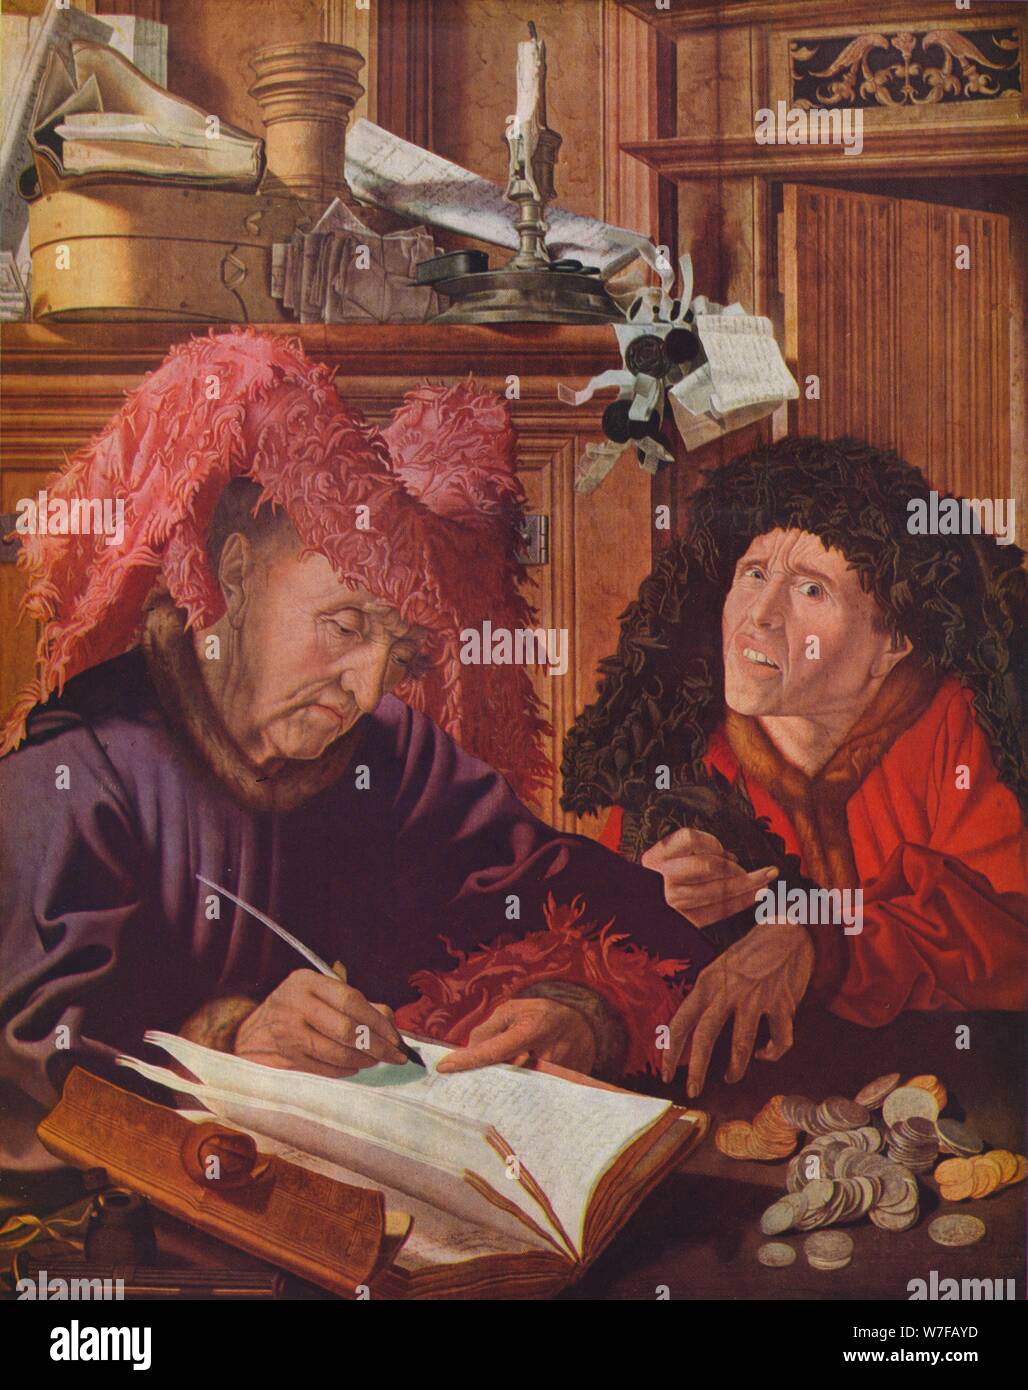 'Two Bankers or Usurers', c1540, (1939). Artist: Marinus van Reymerswaele. Stock Photo